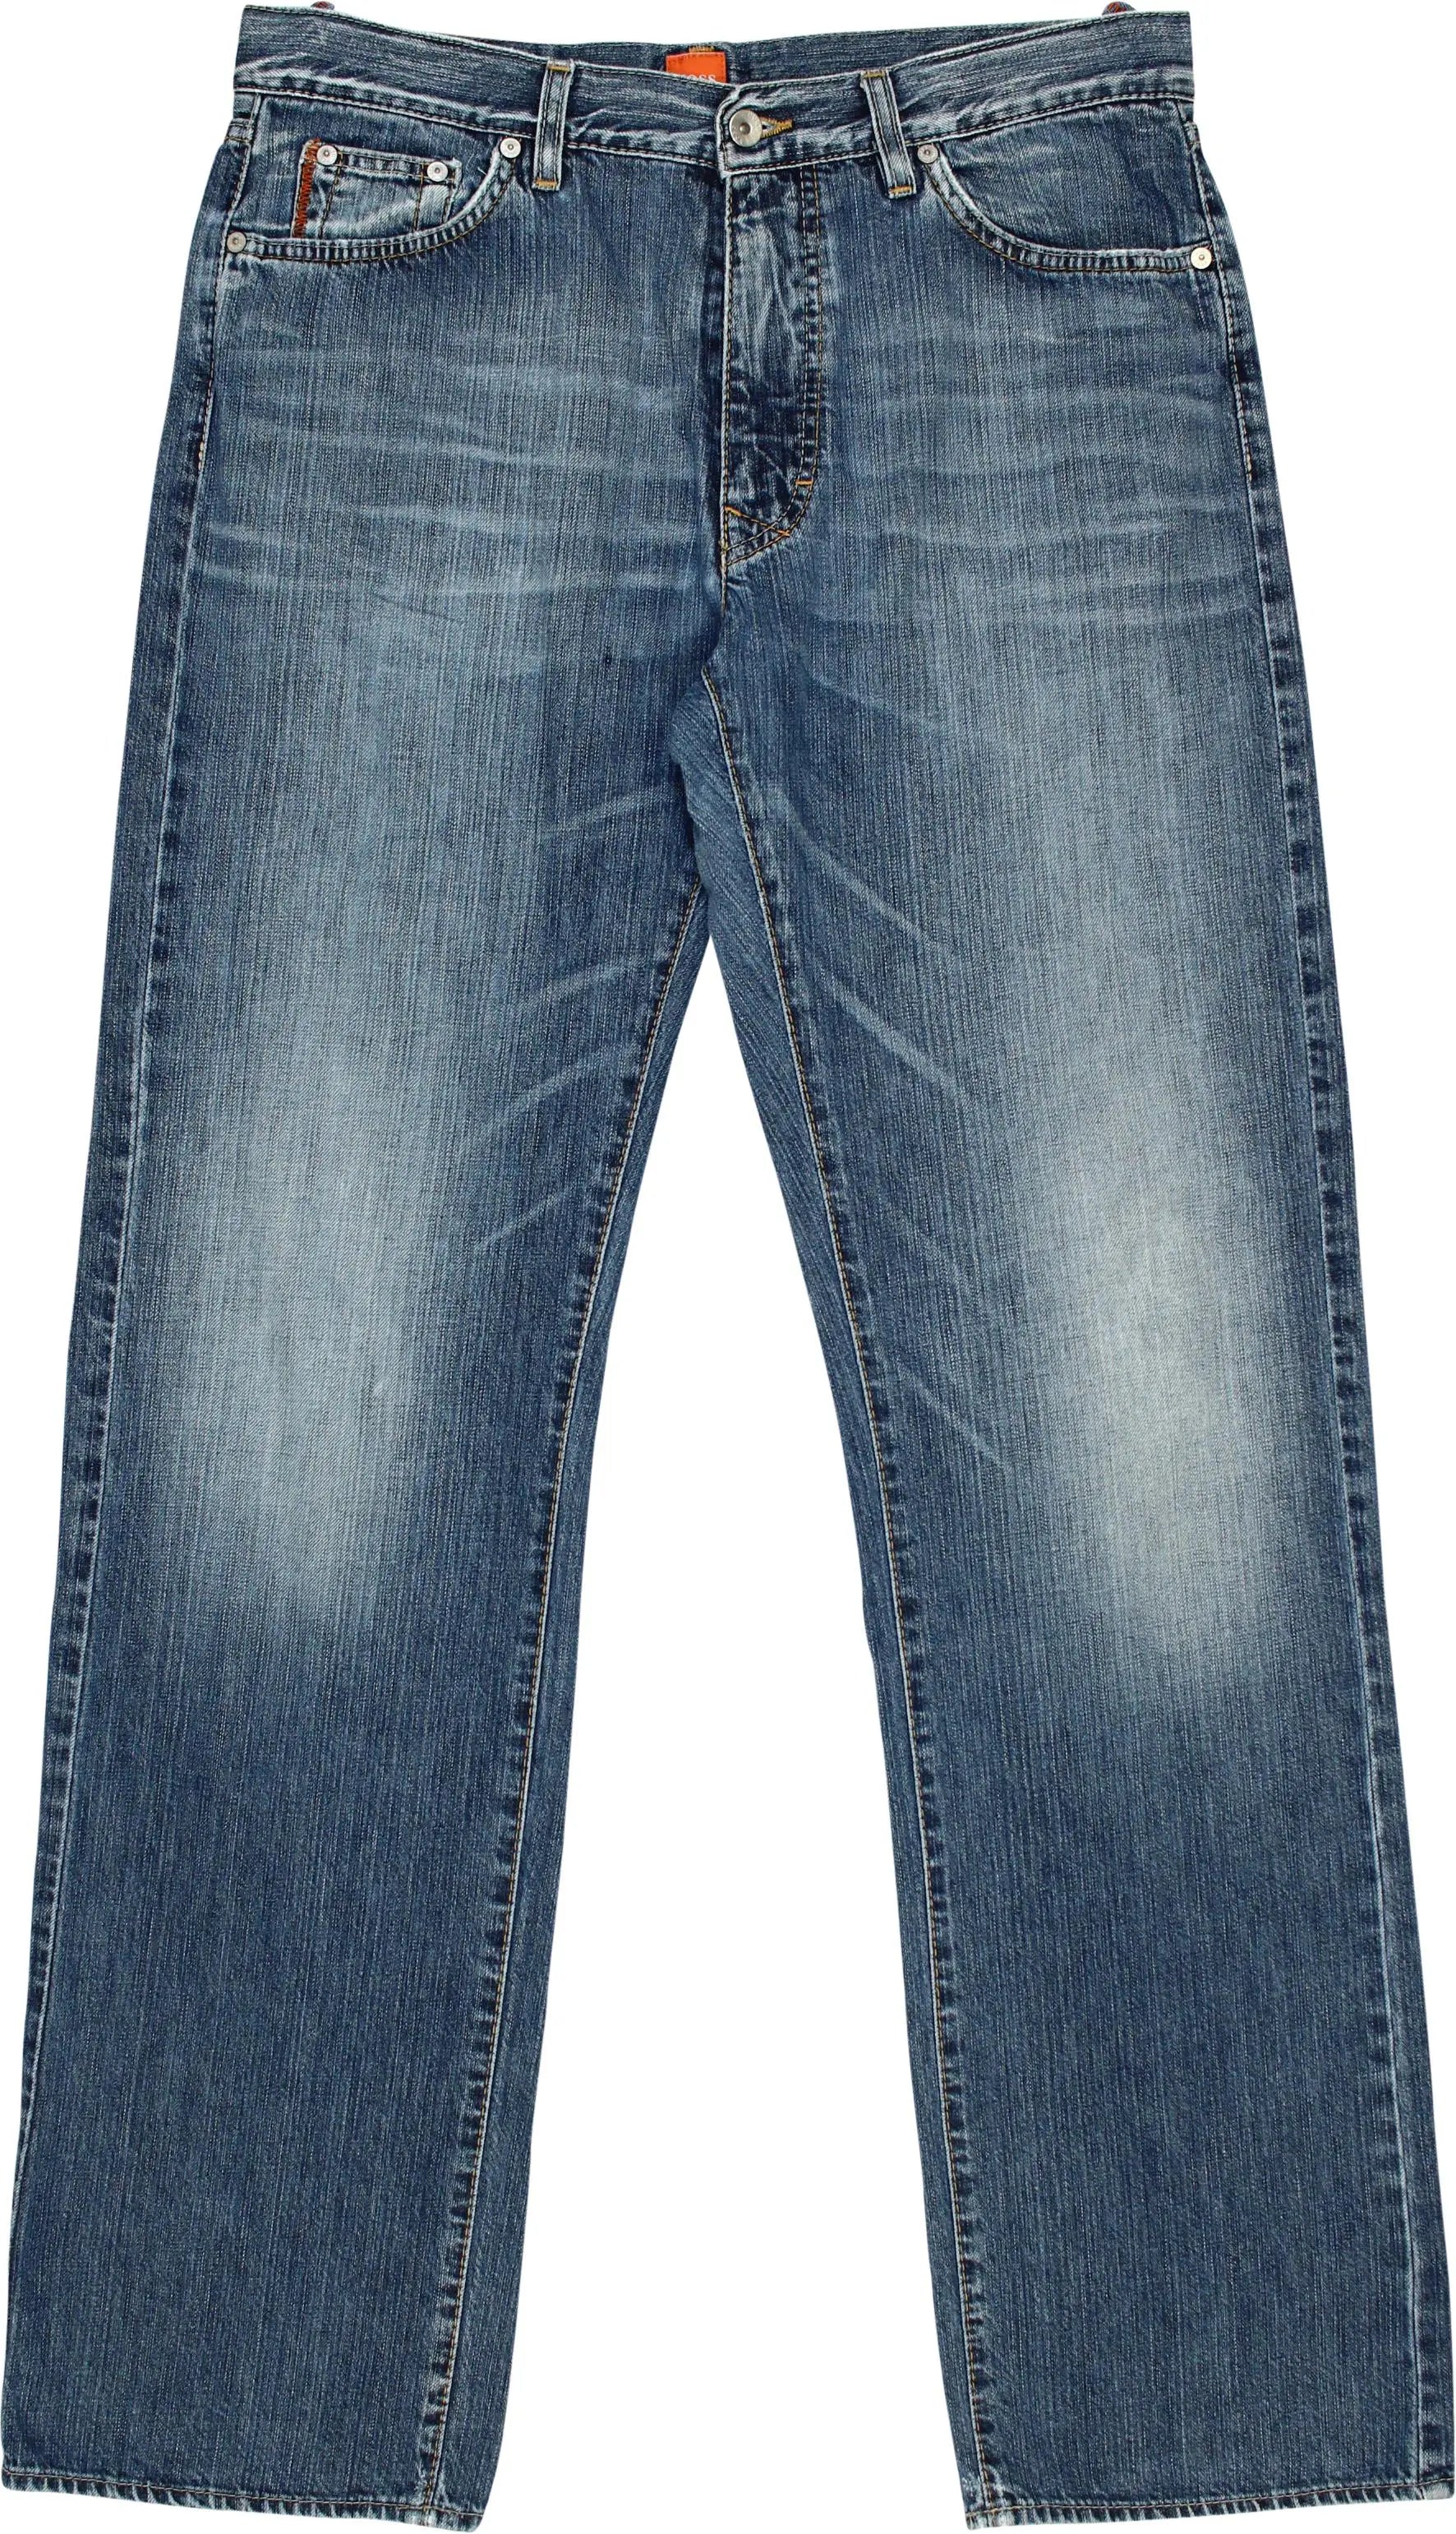 Hugo Boss - Hugo Boss Regular Fit Jeans- ThriftTale.com - Vintage and second handclothing